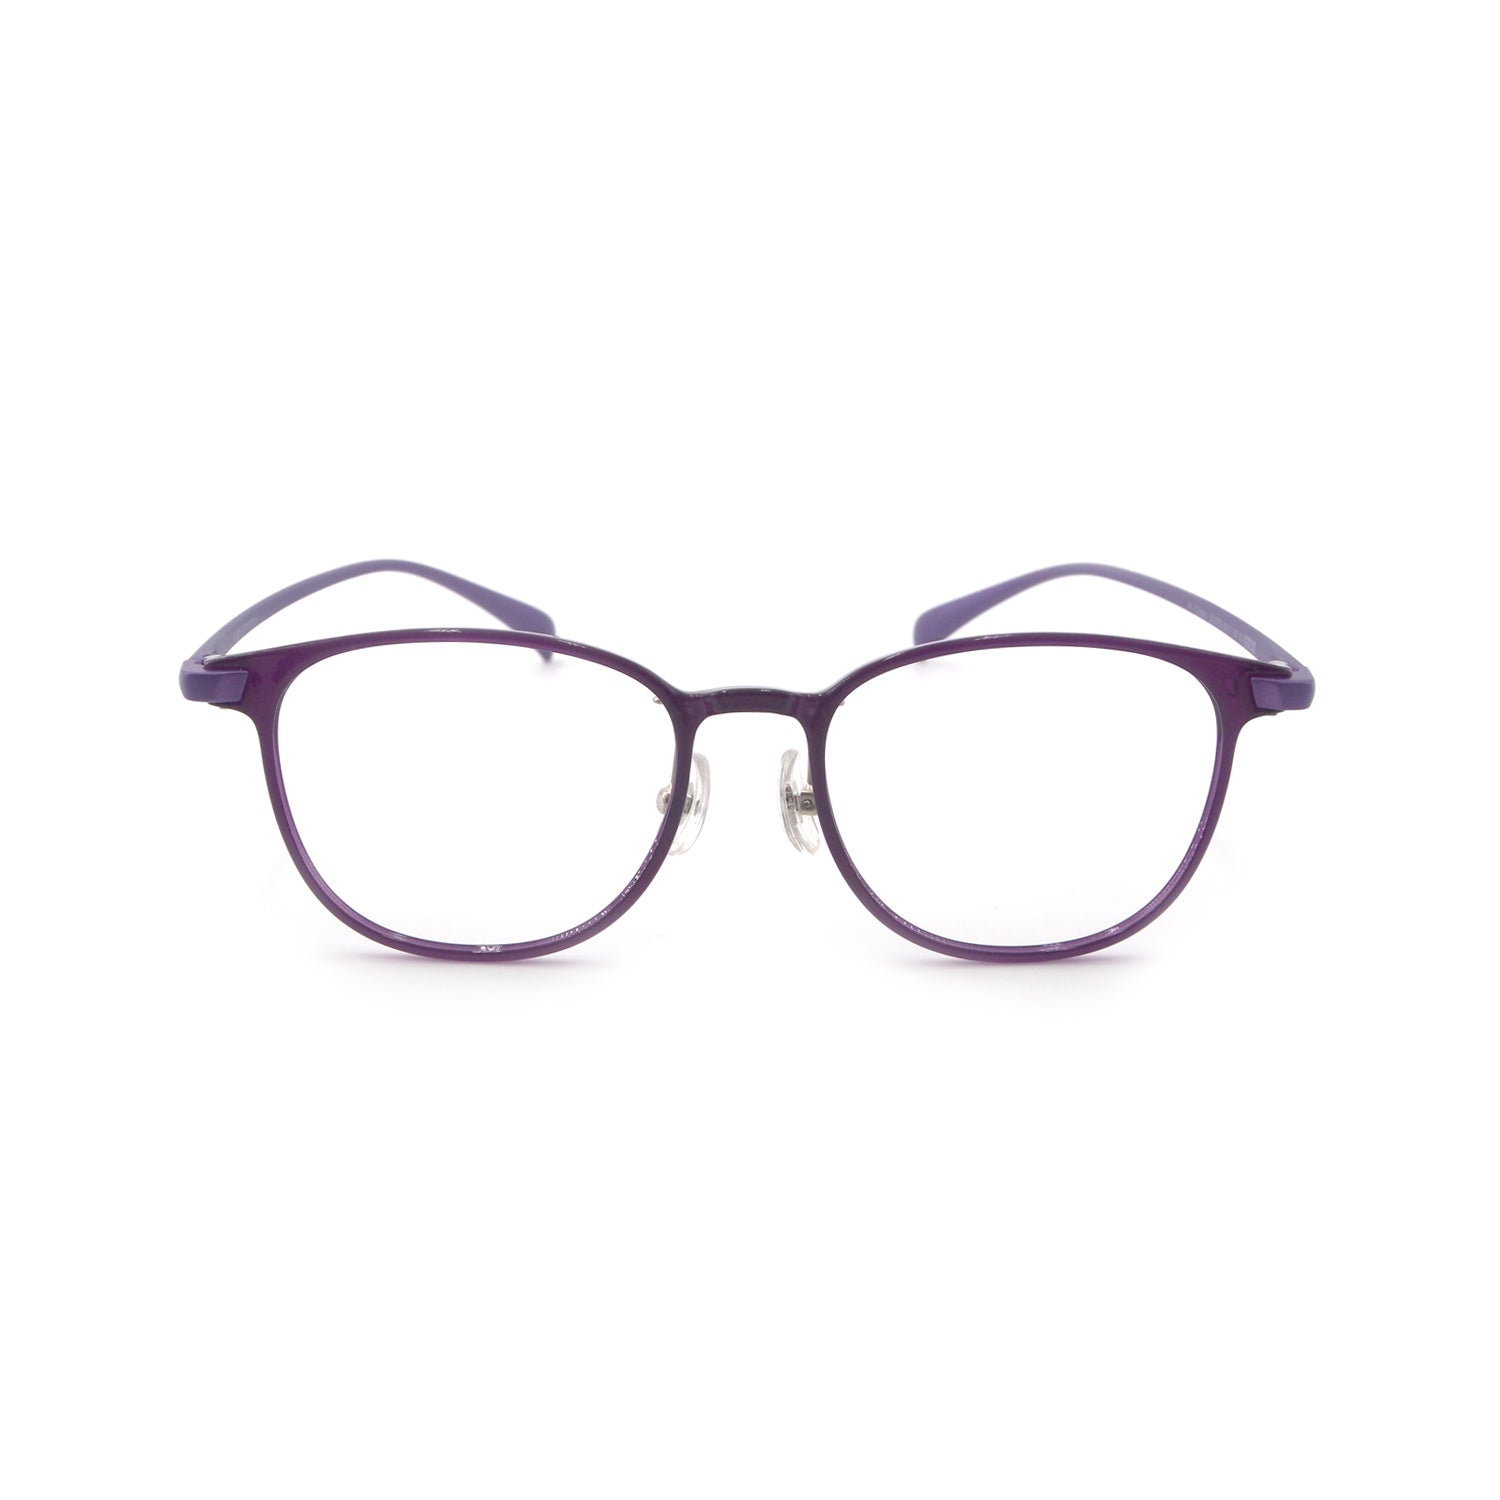 Tramontana in Azalea Purple Eyeglasses - sightonomy